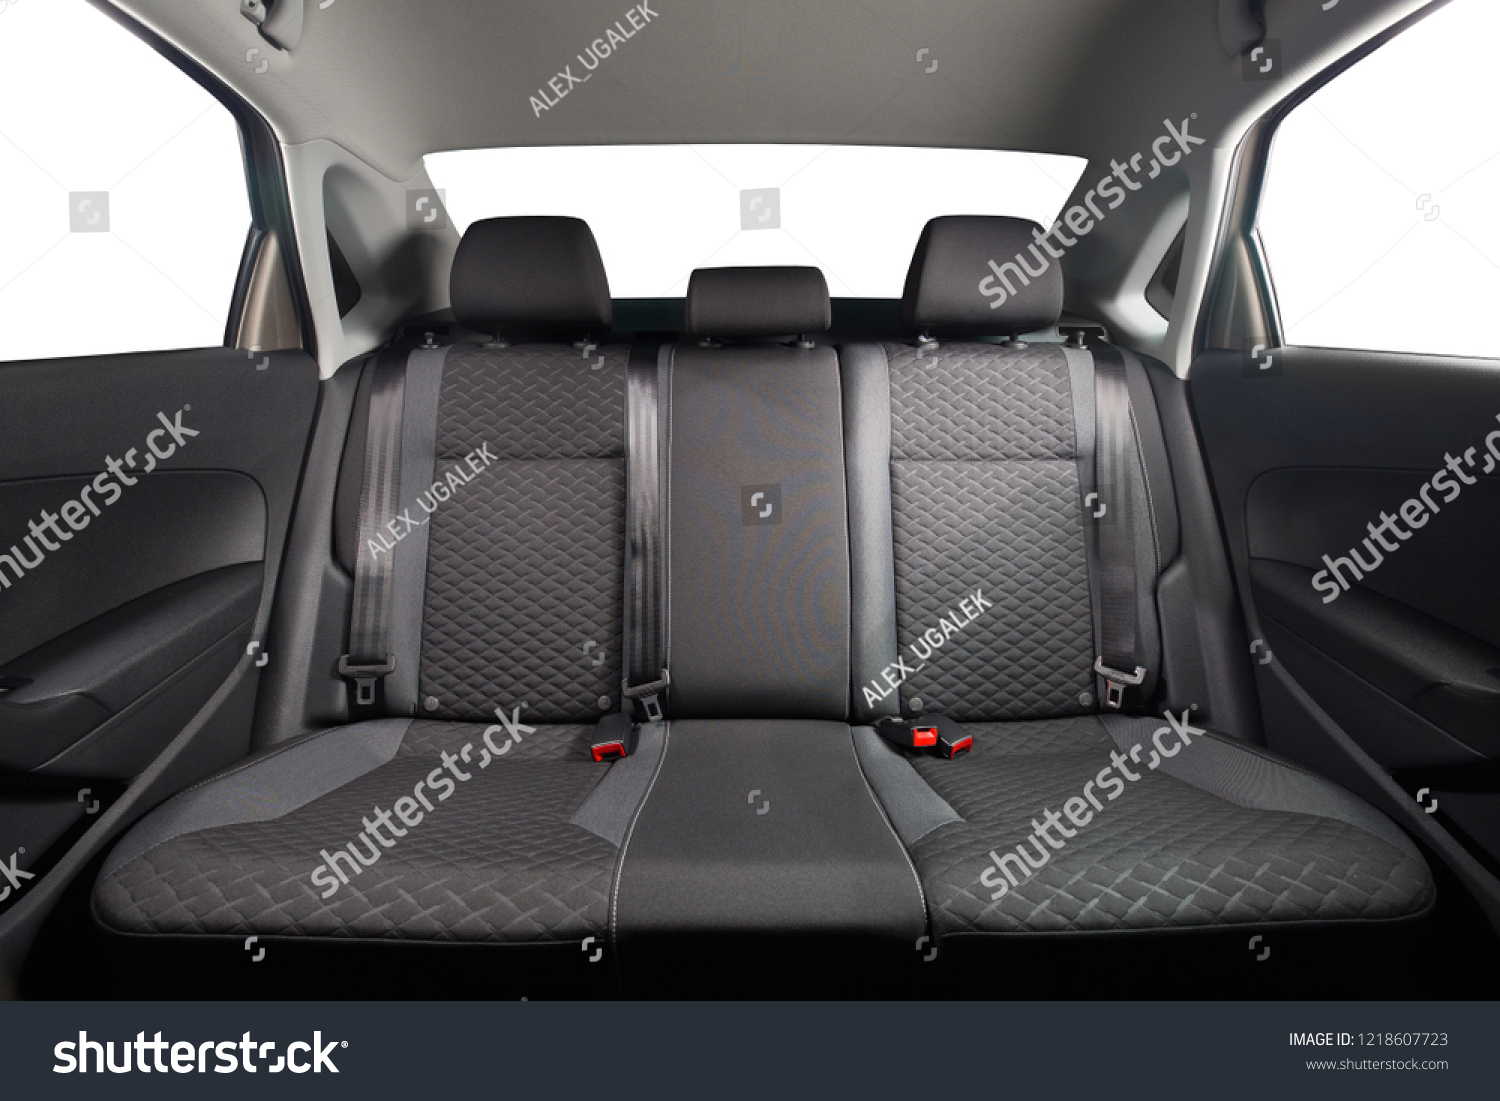 New car inside. Clean car interior. Black back seats in sedan. Car cleaning theme. #1218607723